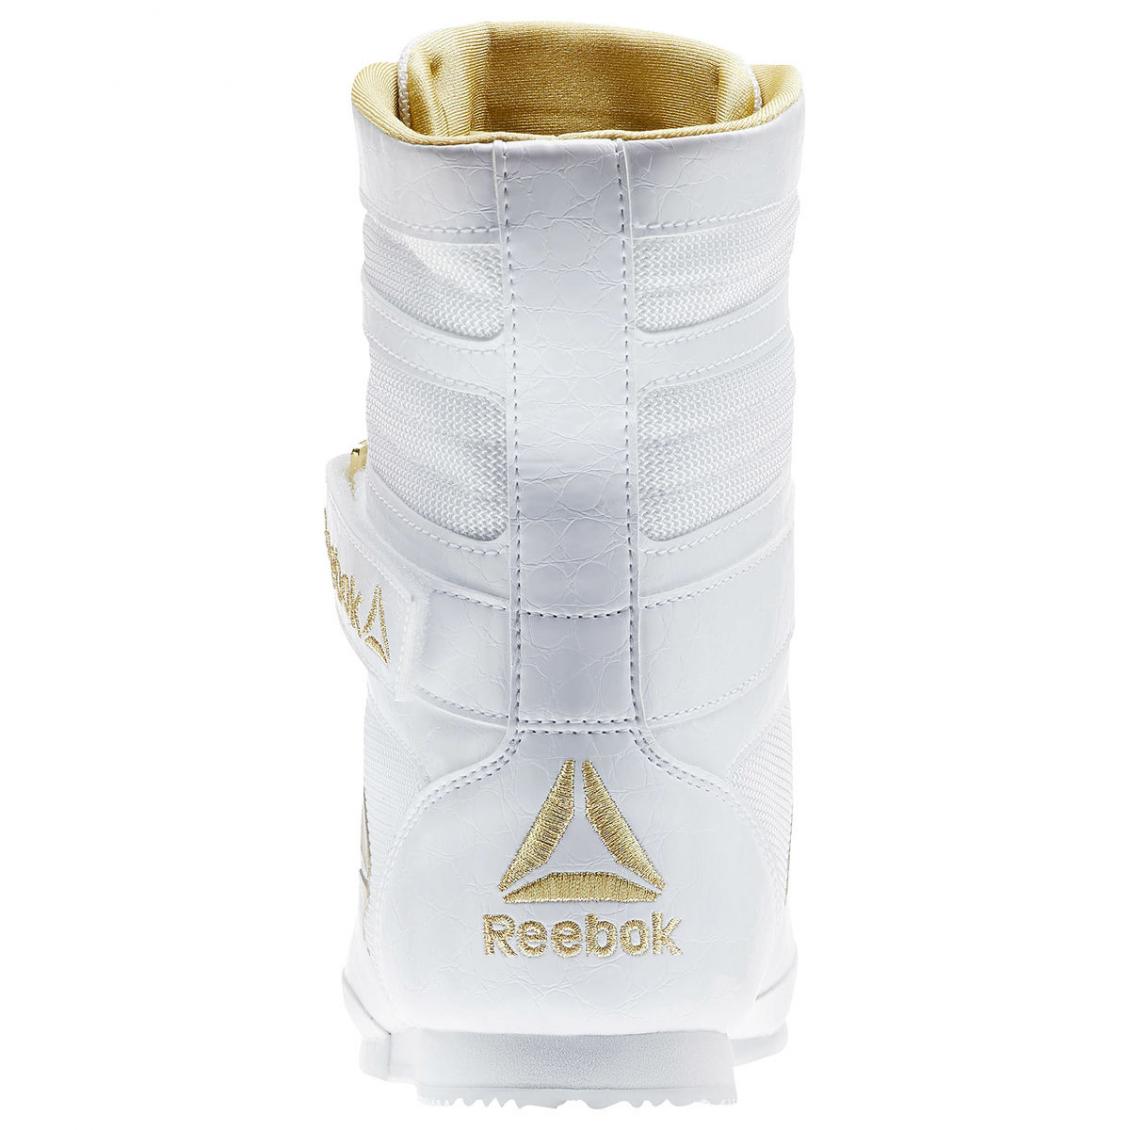 Men's Reebok Boxing Boot "Brand New w/Box" CN4739 